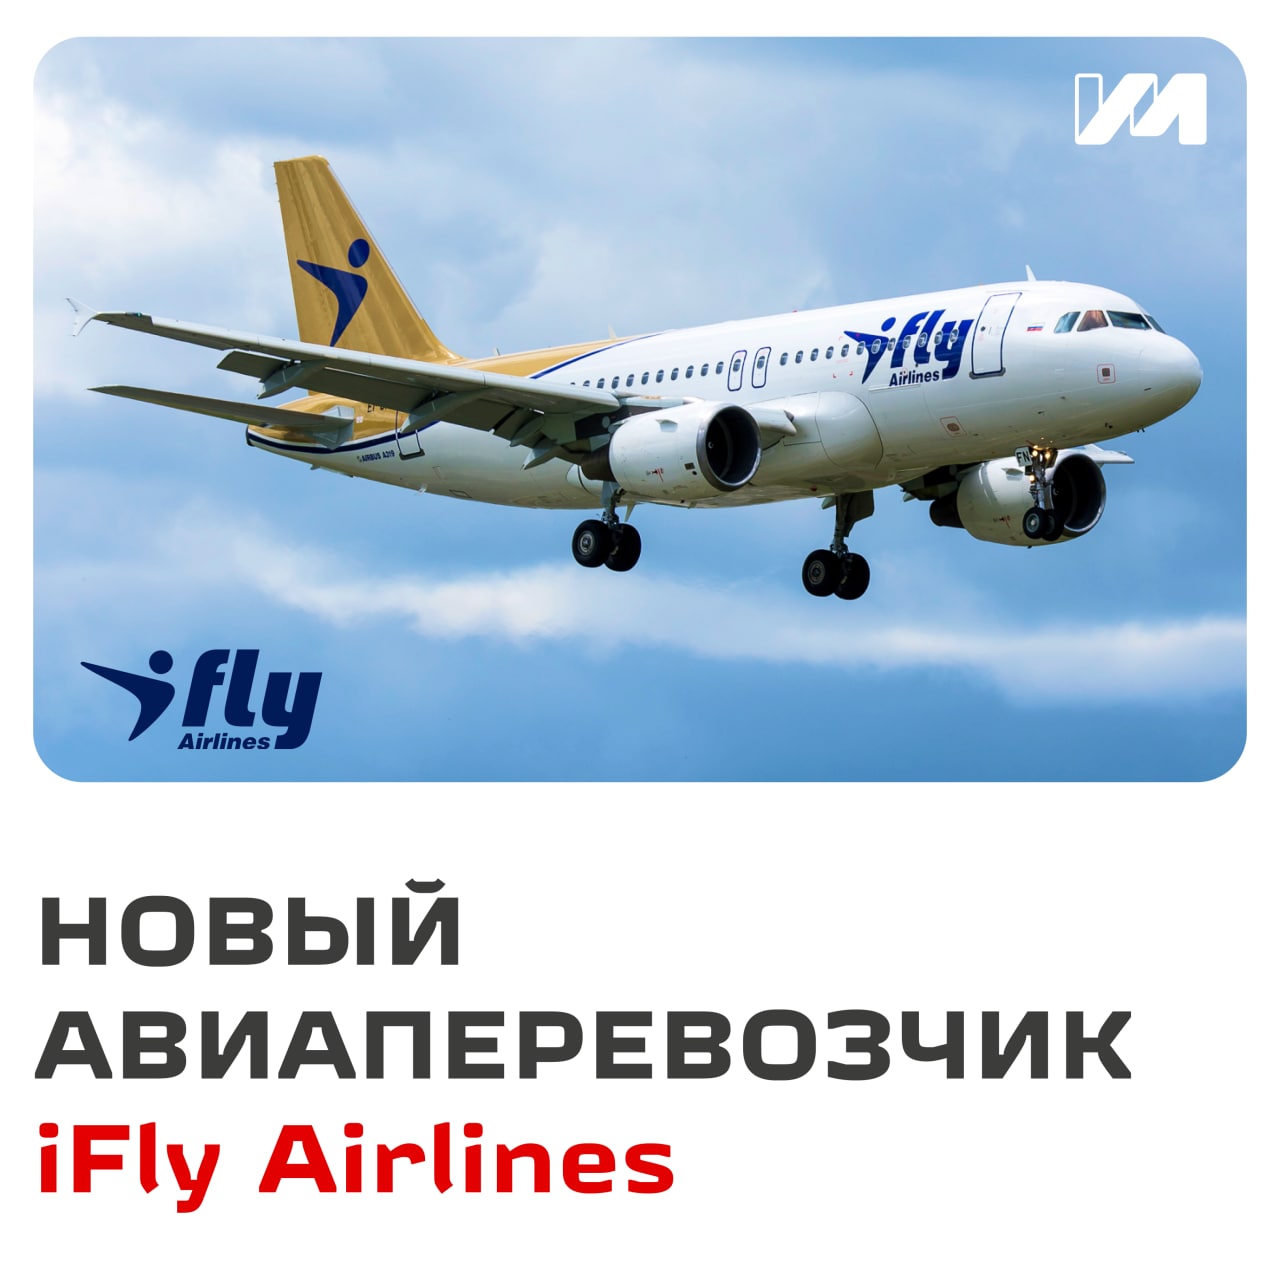 Новый авиаперевозчик iFly Airlines